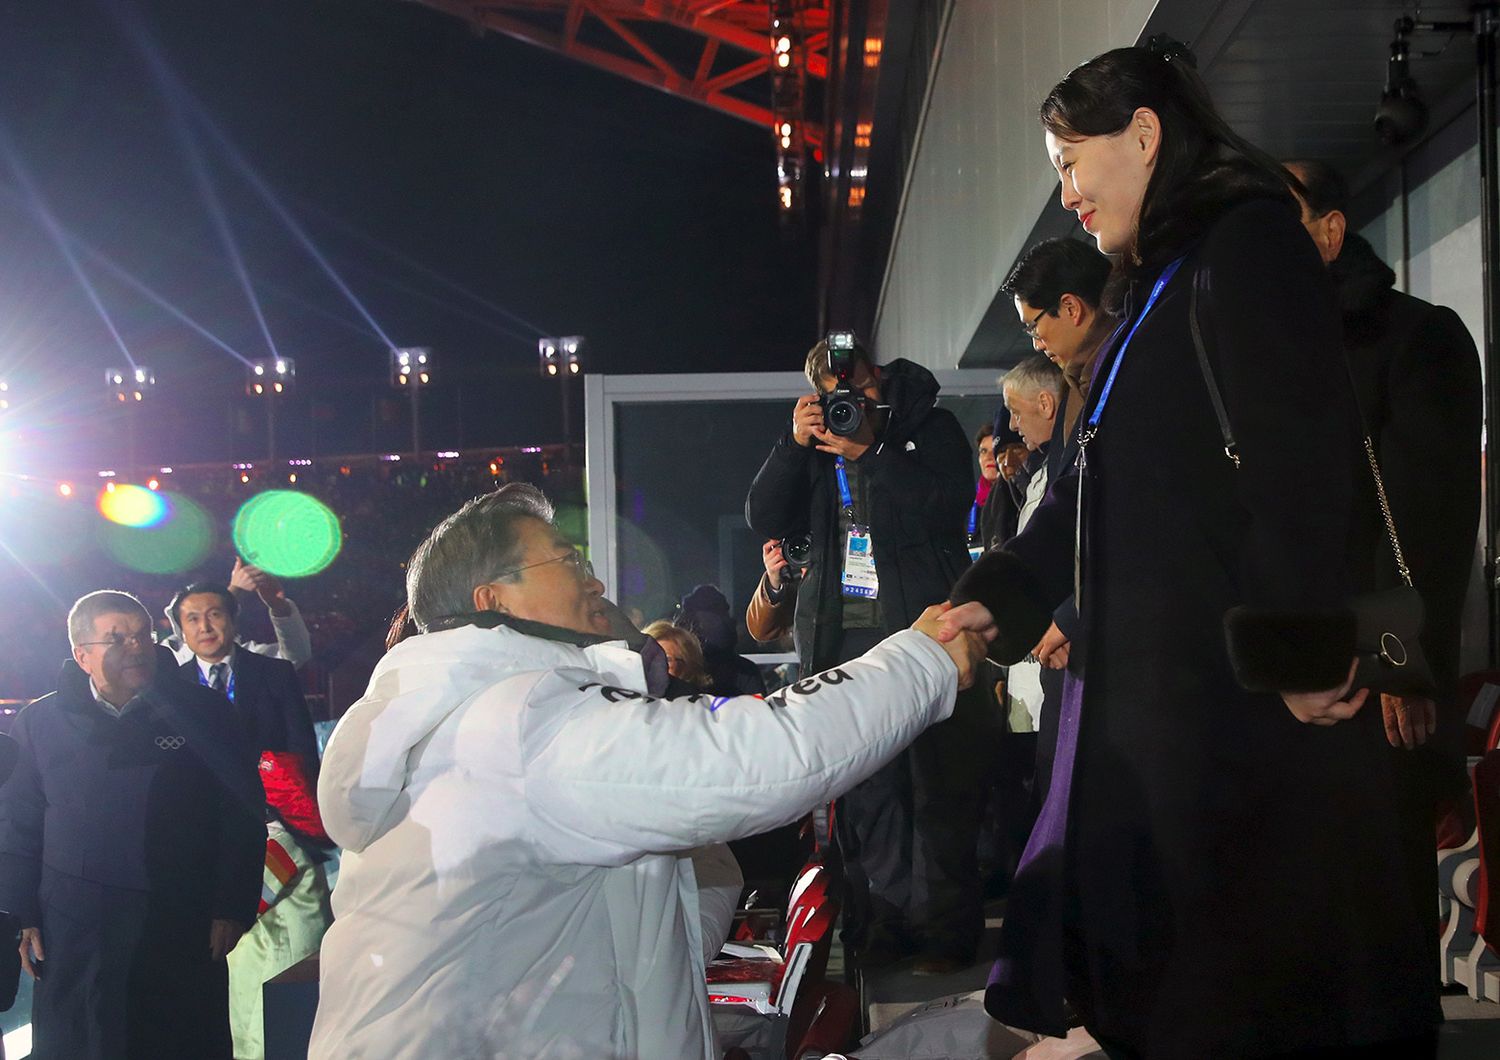 &nbsp;La sorella del leader nordcoreano Kim Jong Un, Kim Yo Jong, stringe la mano al presidente sudcoreano Moon Jae-in durante la cerimonia di apertura dei Giochi olimpici invernali Pyeongchang 2018